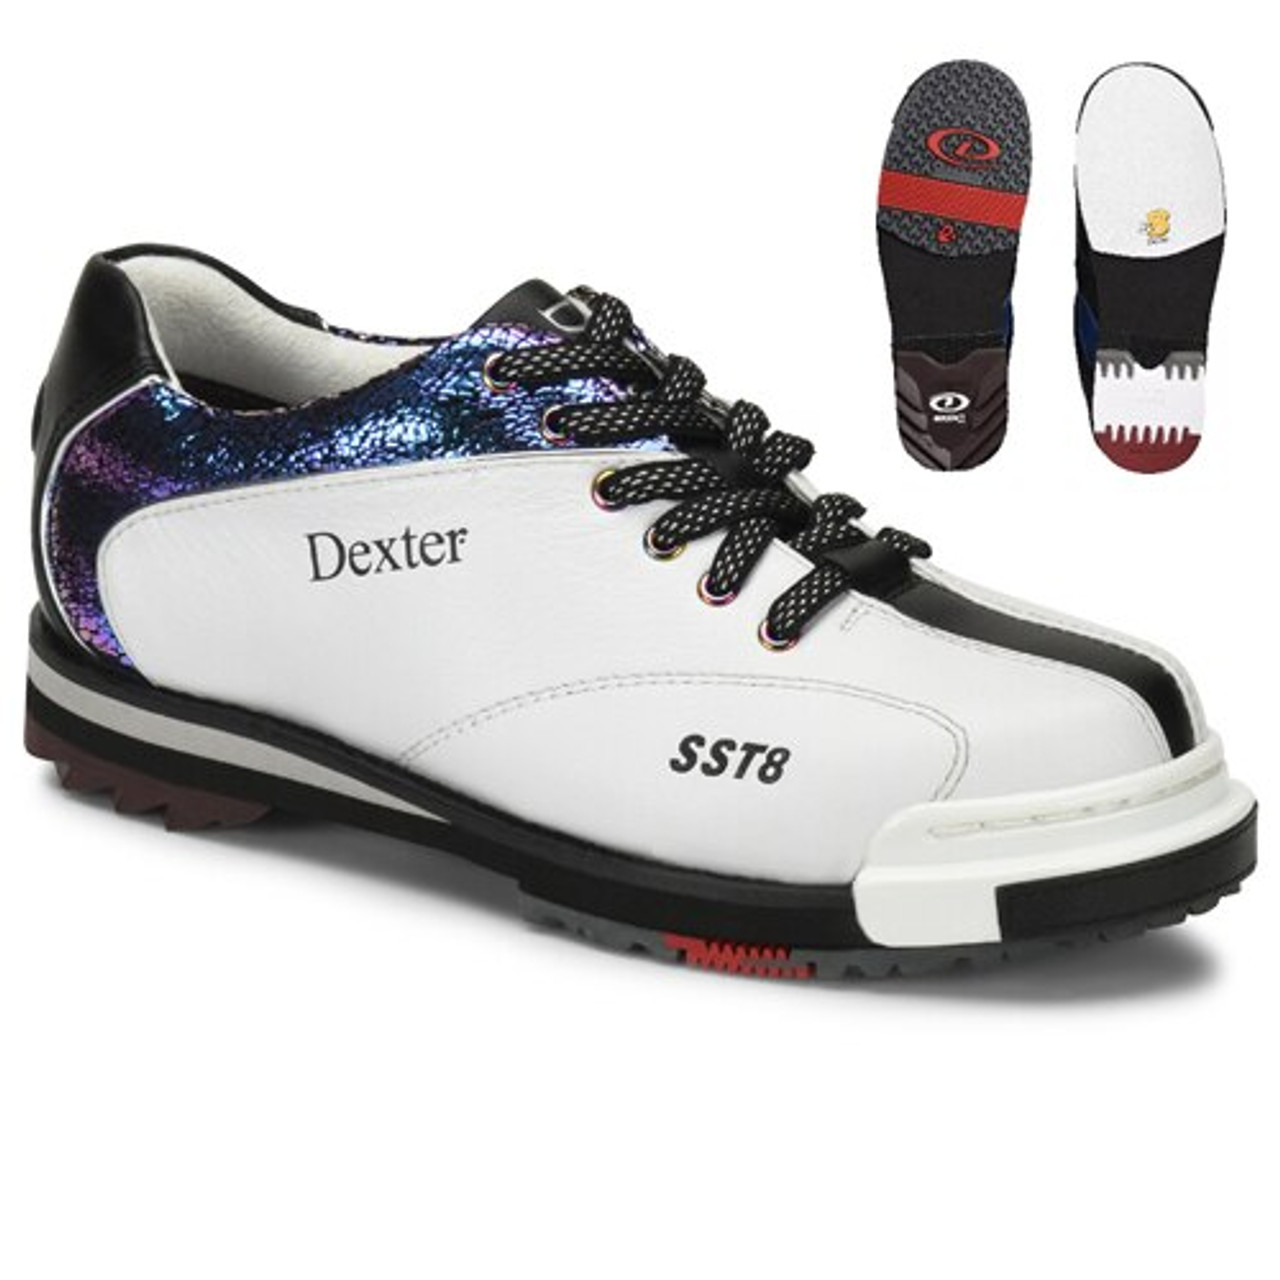 Dexter SST 8 Pro Womens Bowling Shoes White/Crackle/Black WIDE